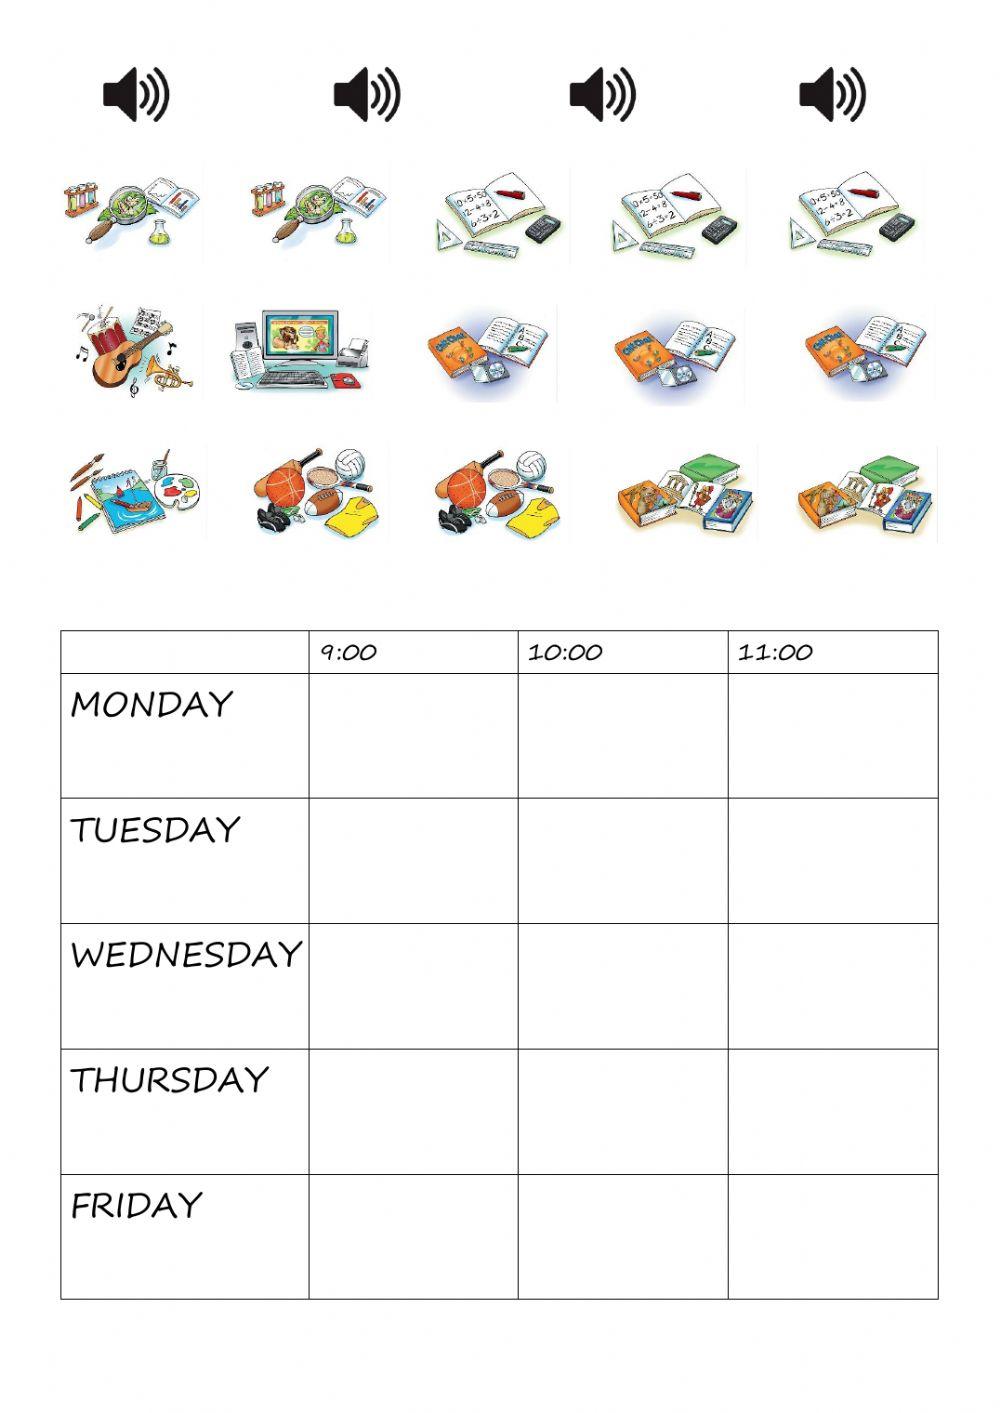 School - My Timetable (extra exercises)